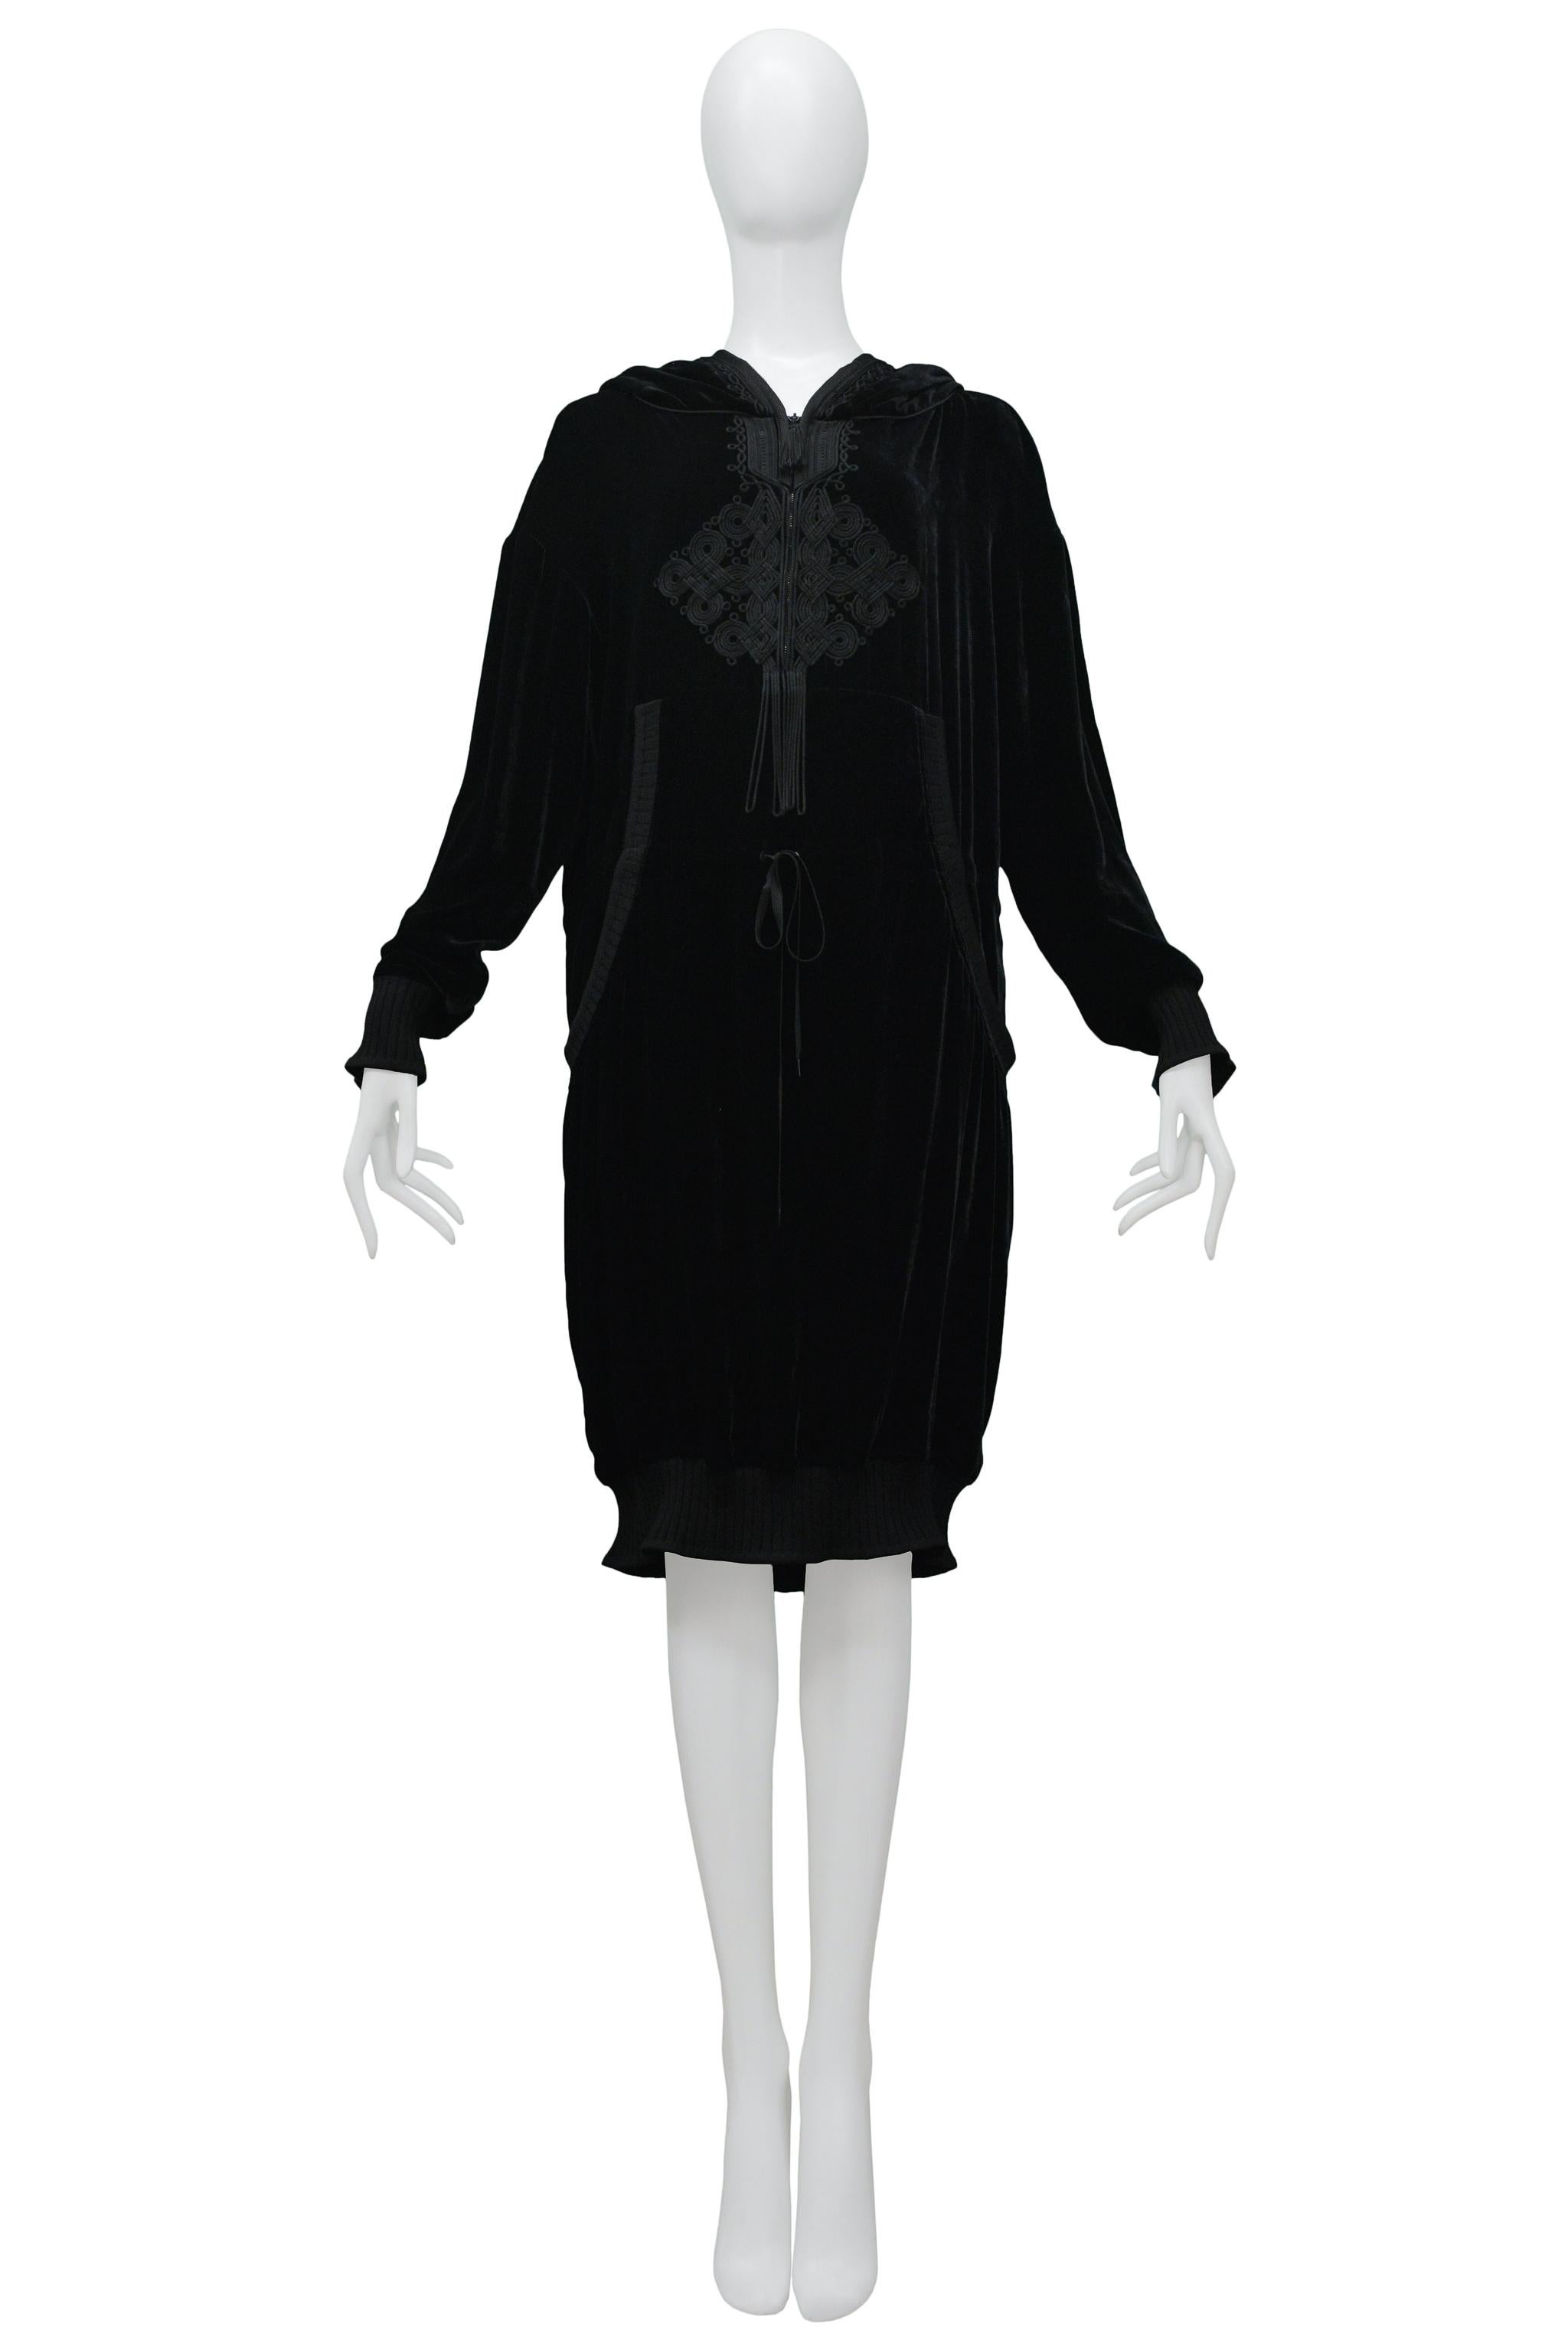 Jean Paul Gaultier Black Velvet Hoodie Tunic Dress 2010 For Sale 3